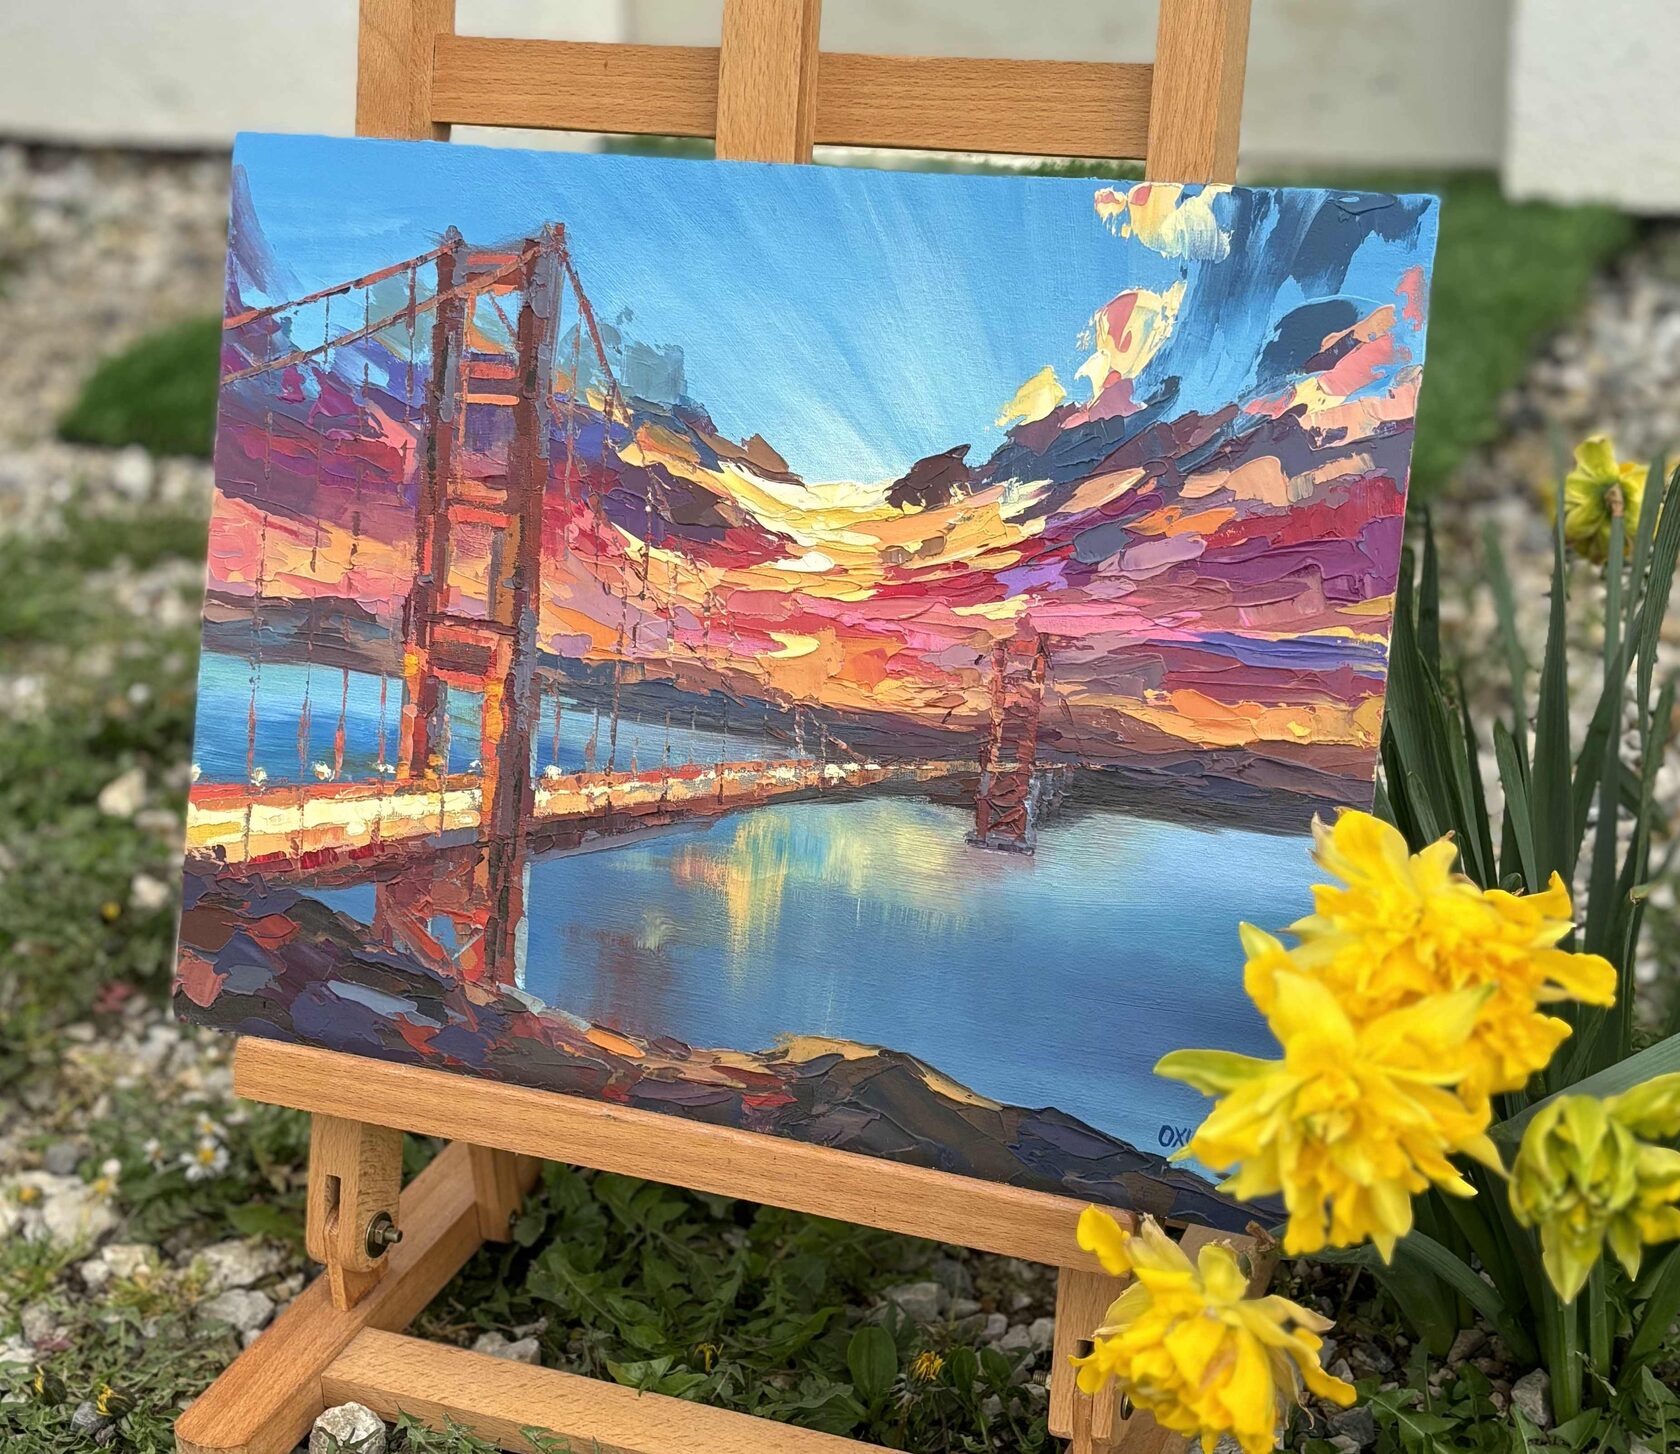 Golden Gate Bridge oil painting, San Francisco abstract art, knife painting, artist OXYPOINT Oxana Kravtsova, painting for sale 